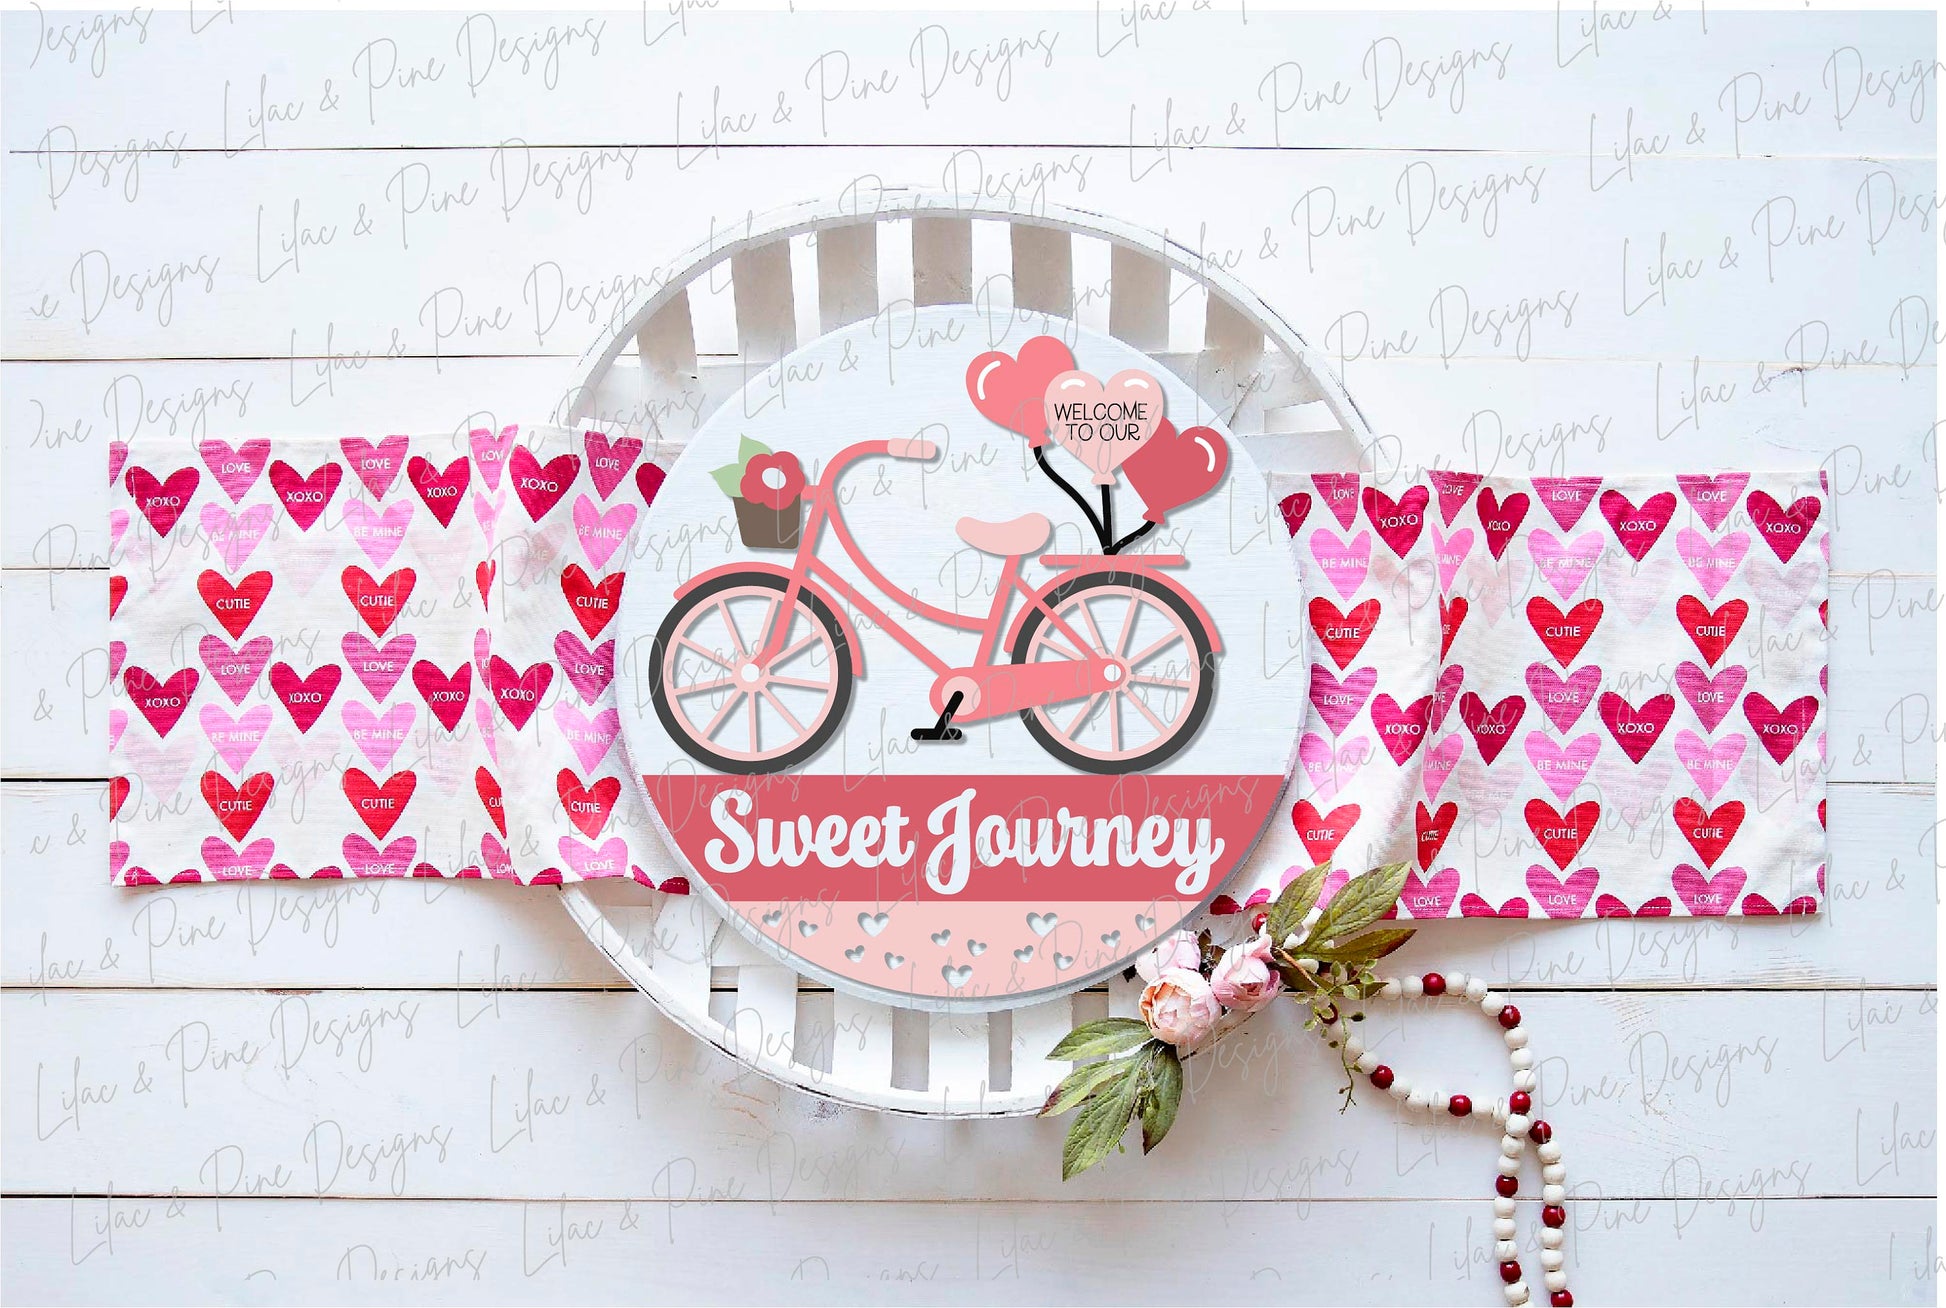 Sweet Journey door hanger SVG, Valentine heart balloons welcome sign, bike round sign Valentines Day decor, Glowforge SVG, laser cut file